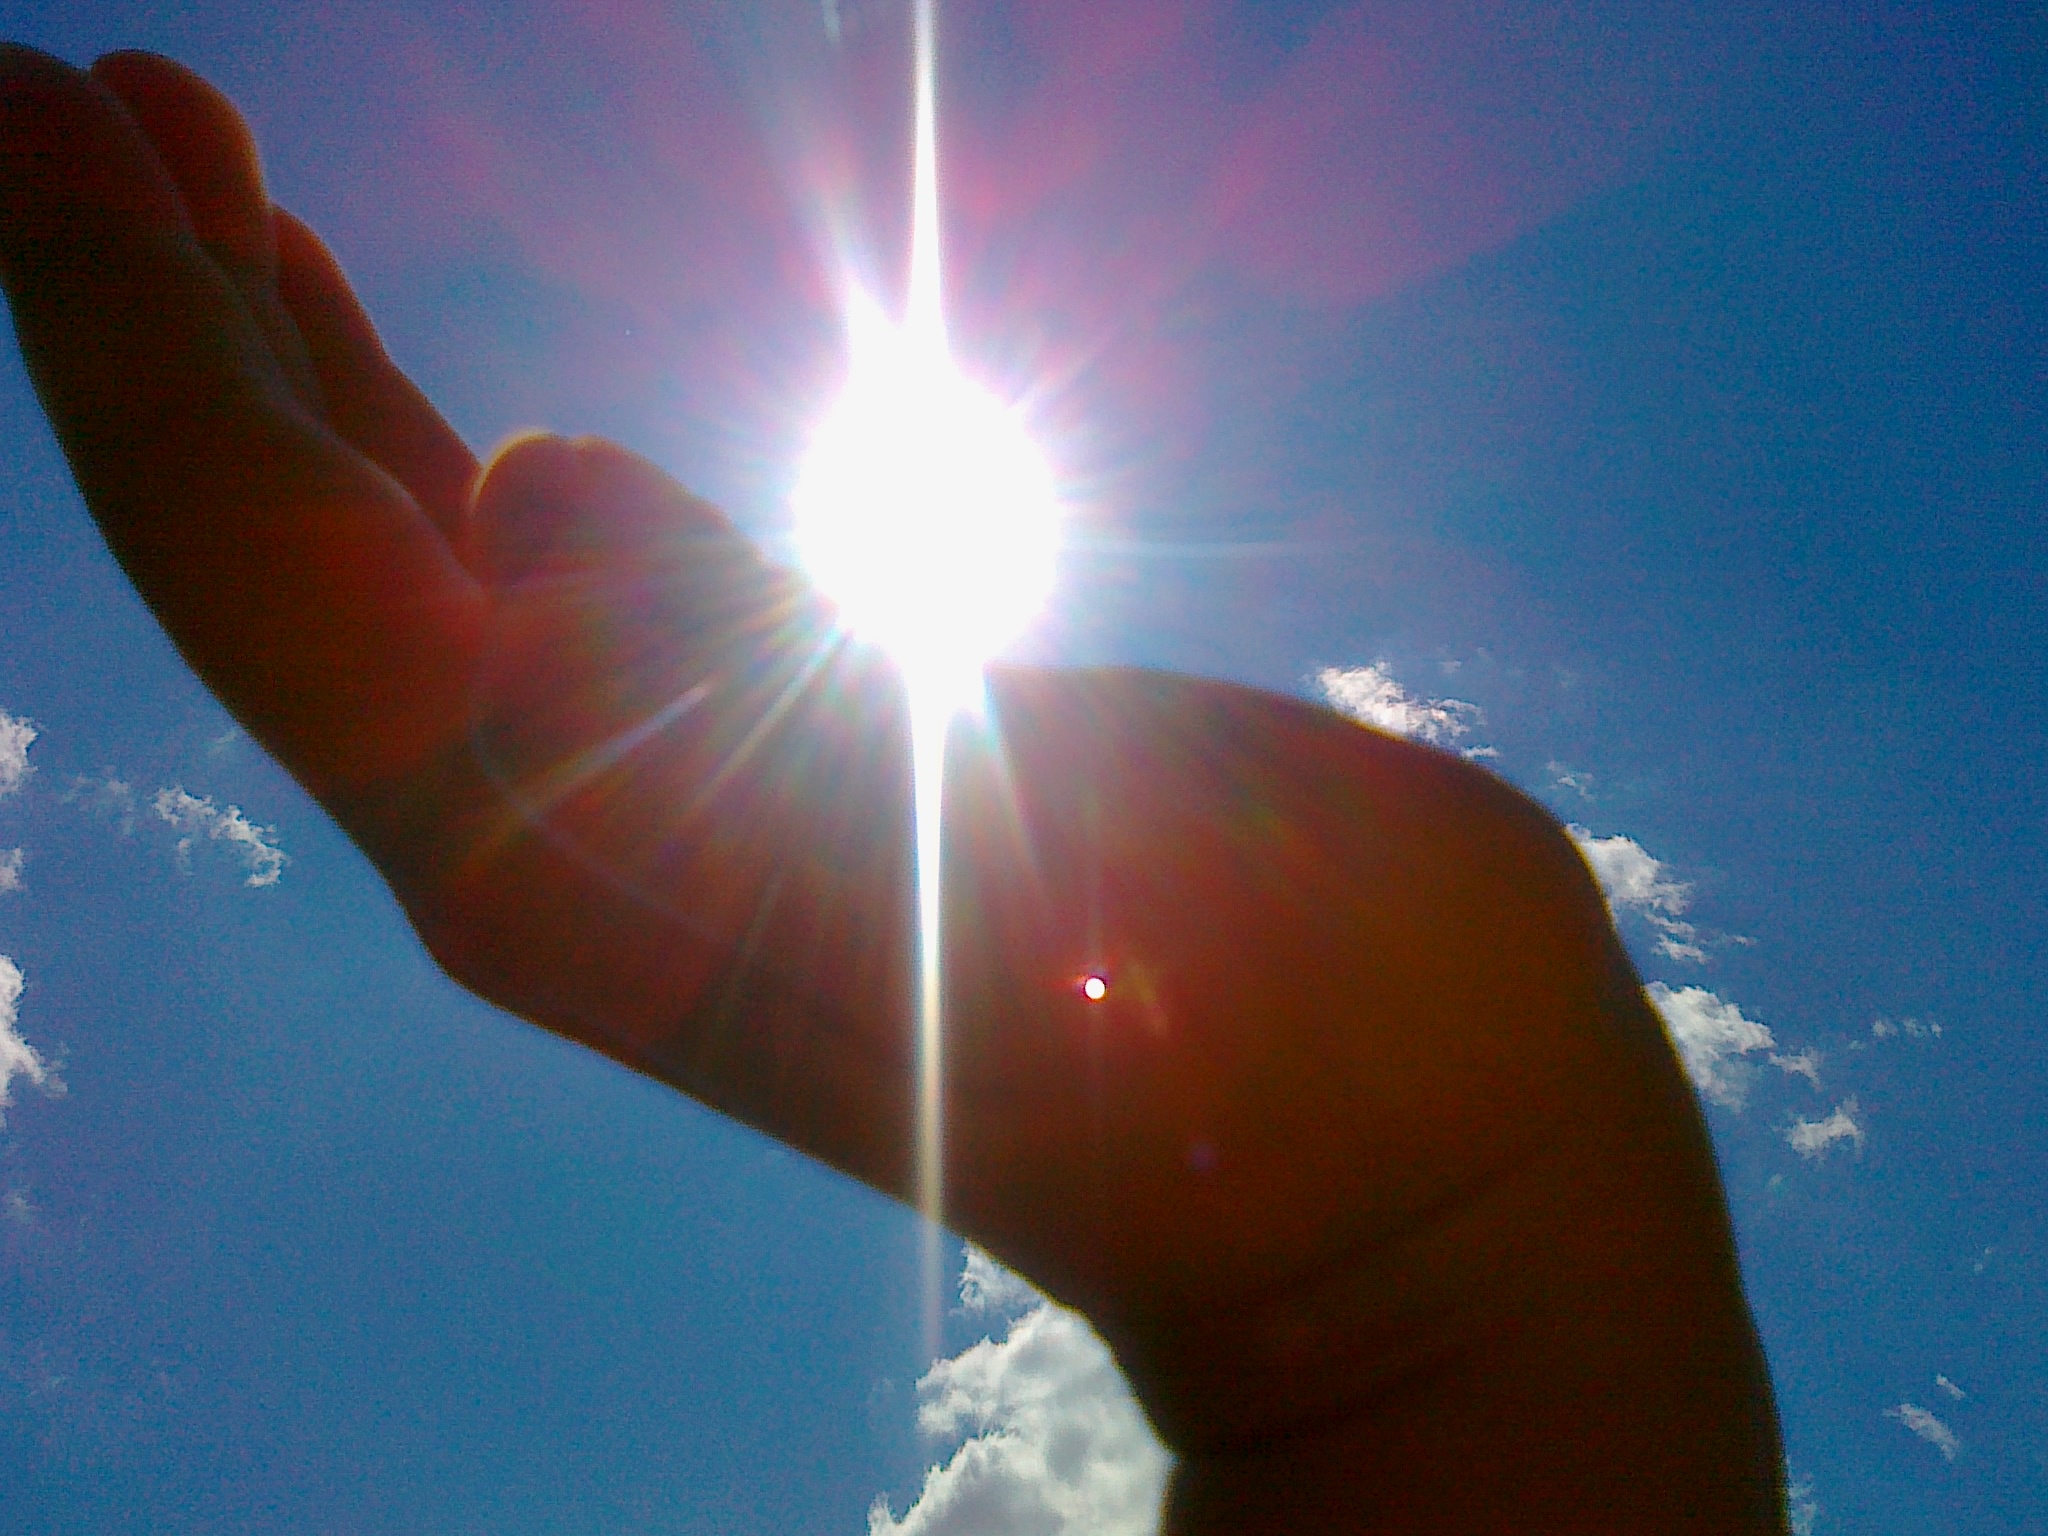 Сердце в лучах света. Солнце в руках. Солнце на ладони. Рука в лучах солнца. Лучик солнца в руке.